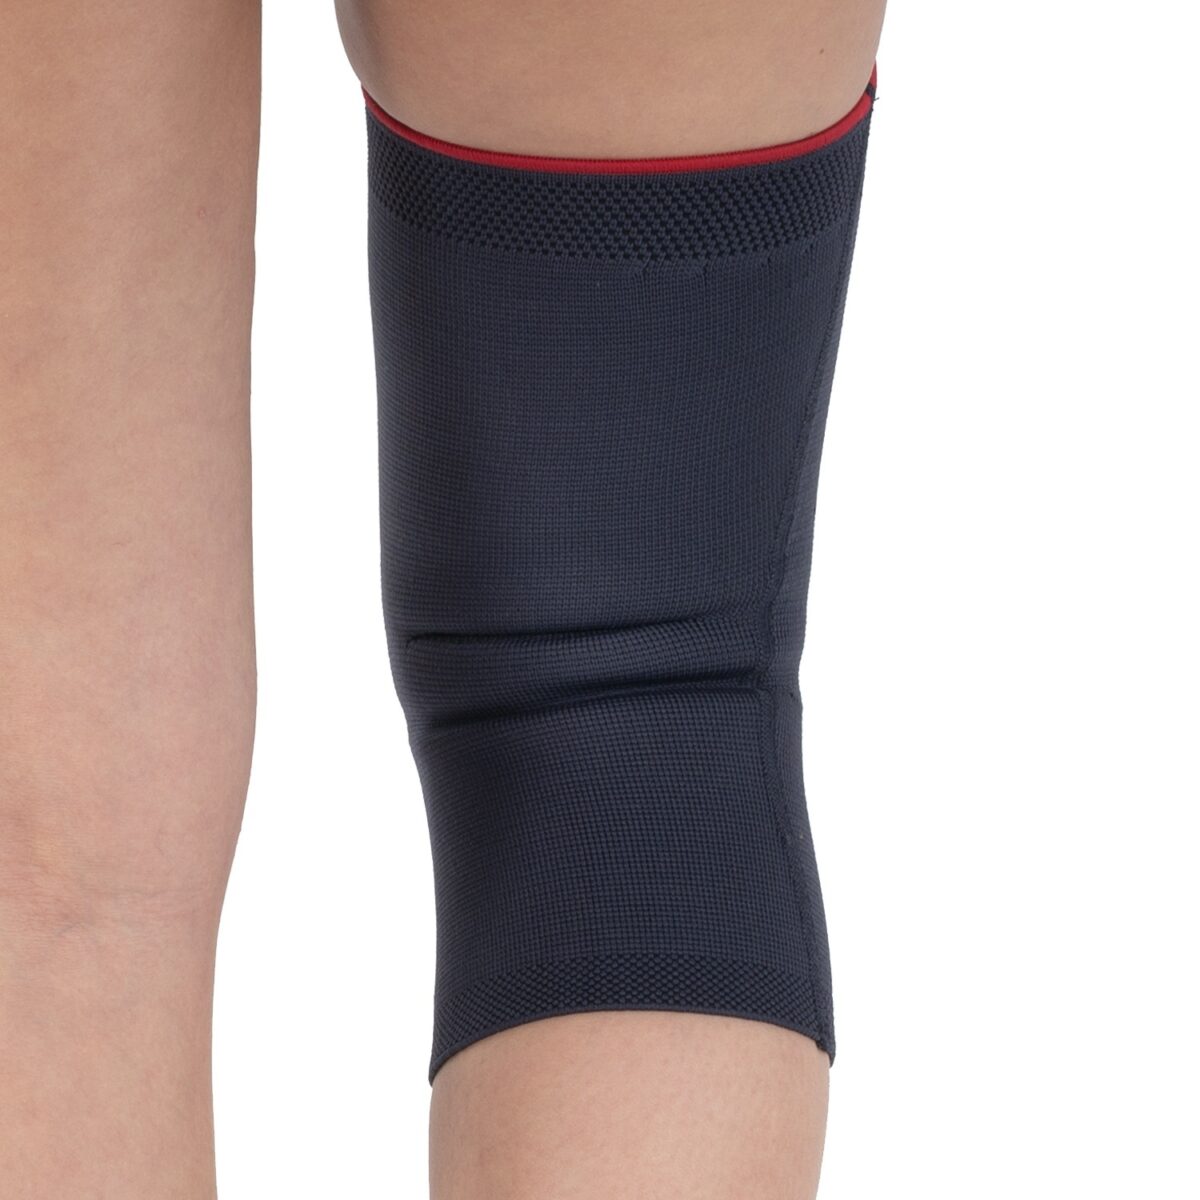 wingmed orthopedic equipments W503 woven patella knee support 80